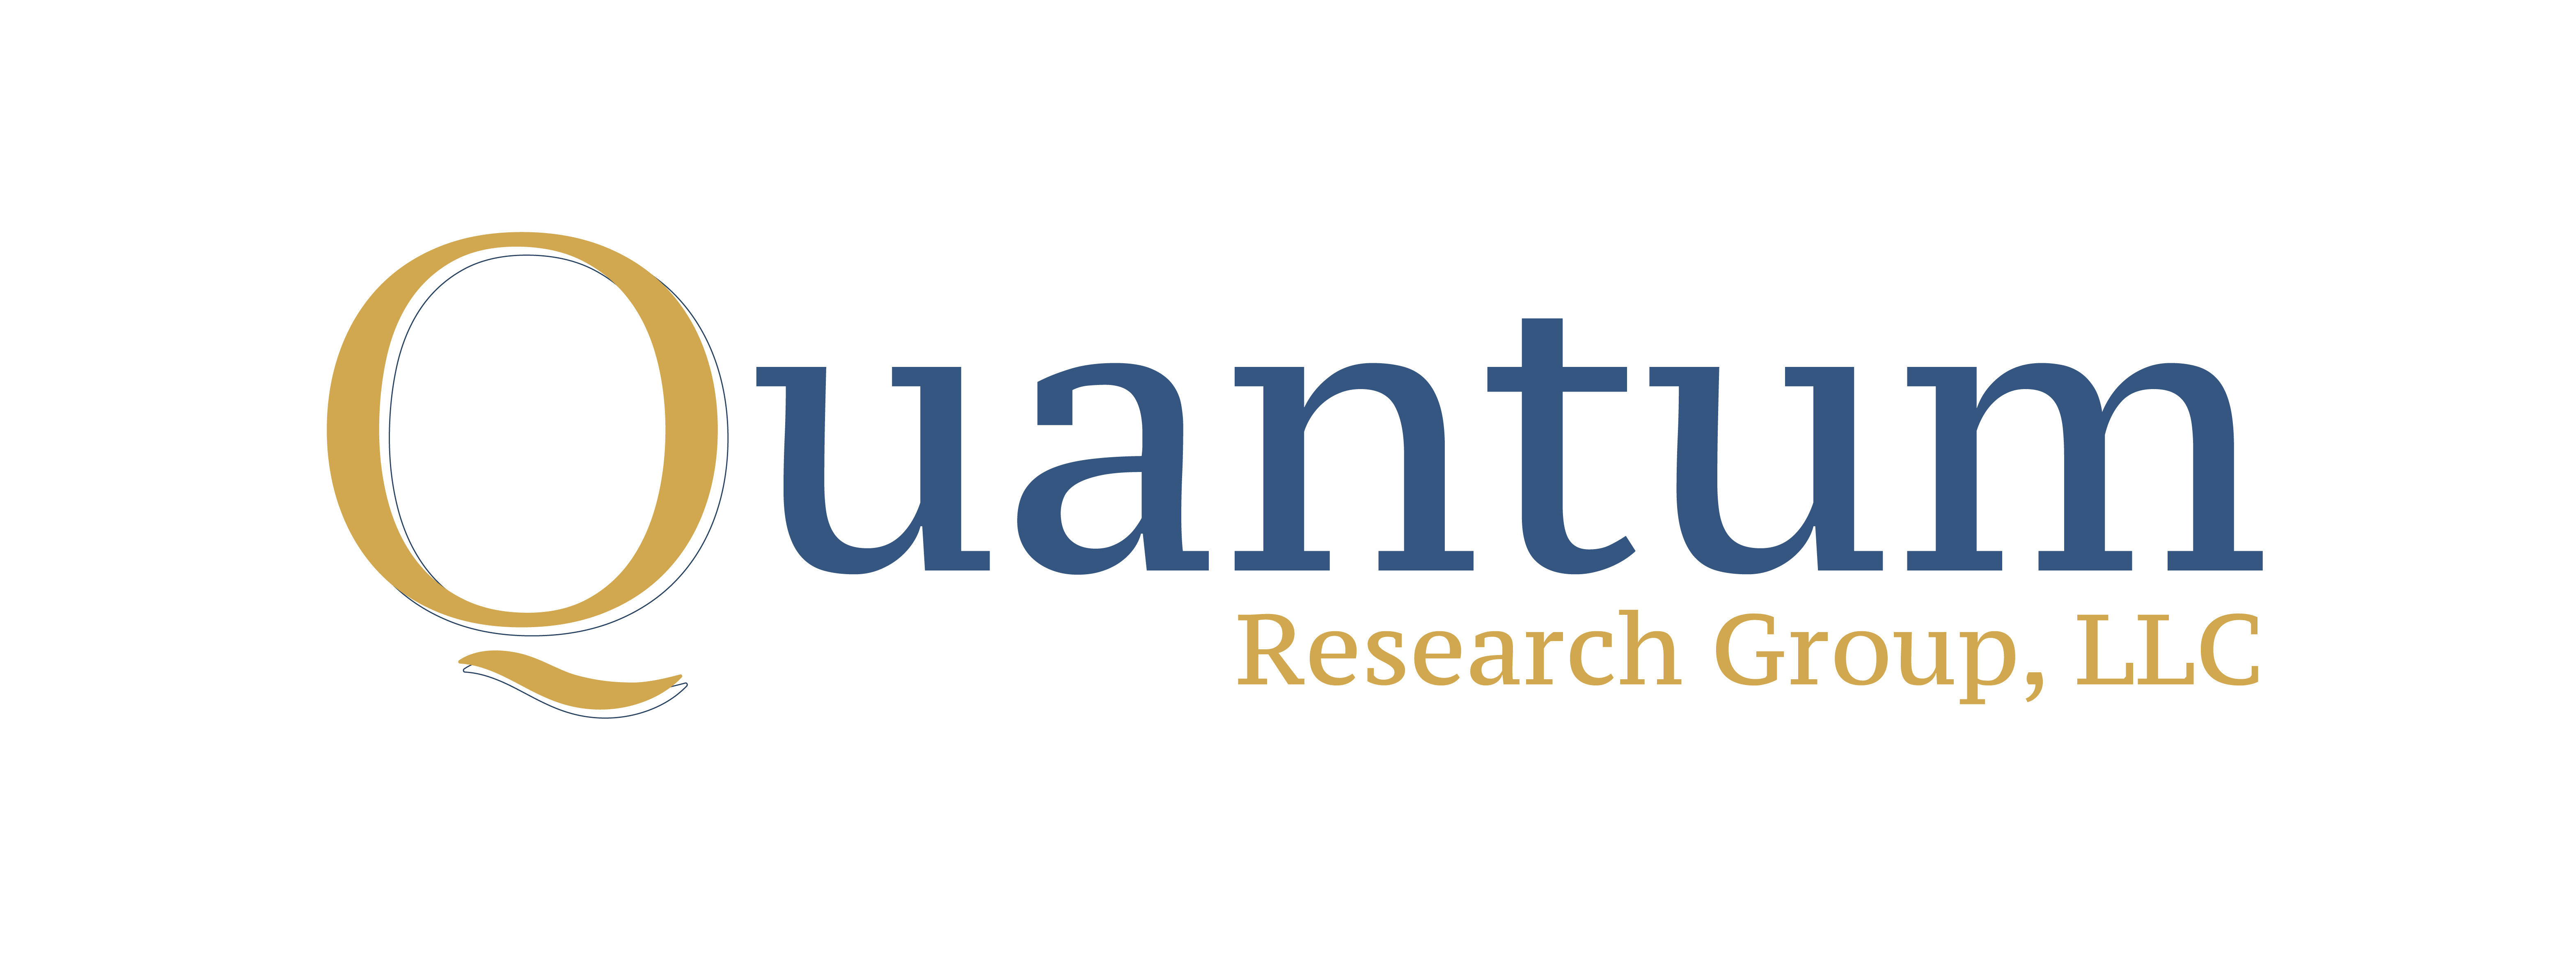 Quantum Research